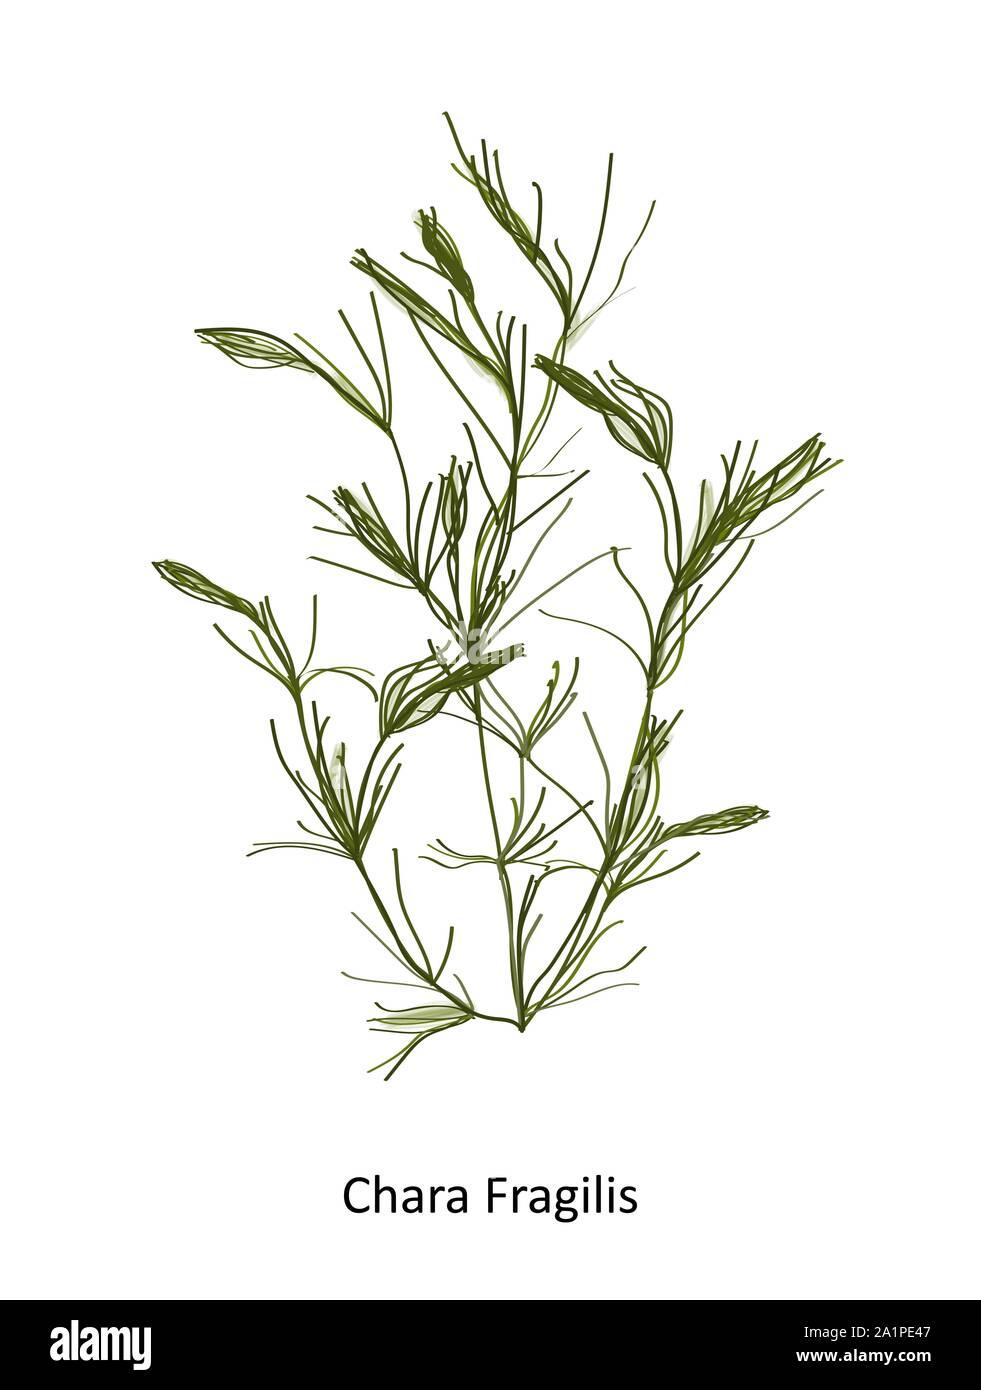 Chara fragilis - a genus of charophyte green algae. Hand drawn vector illustration Stock Vector